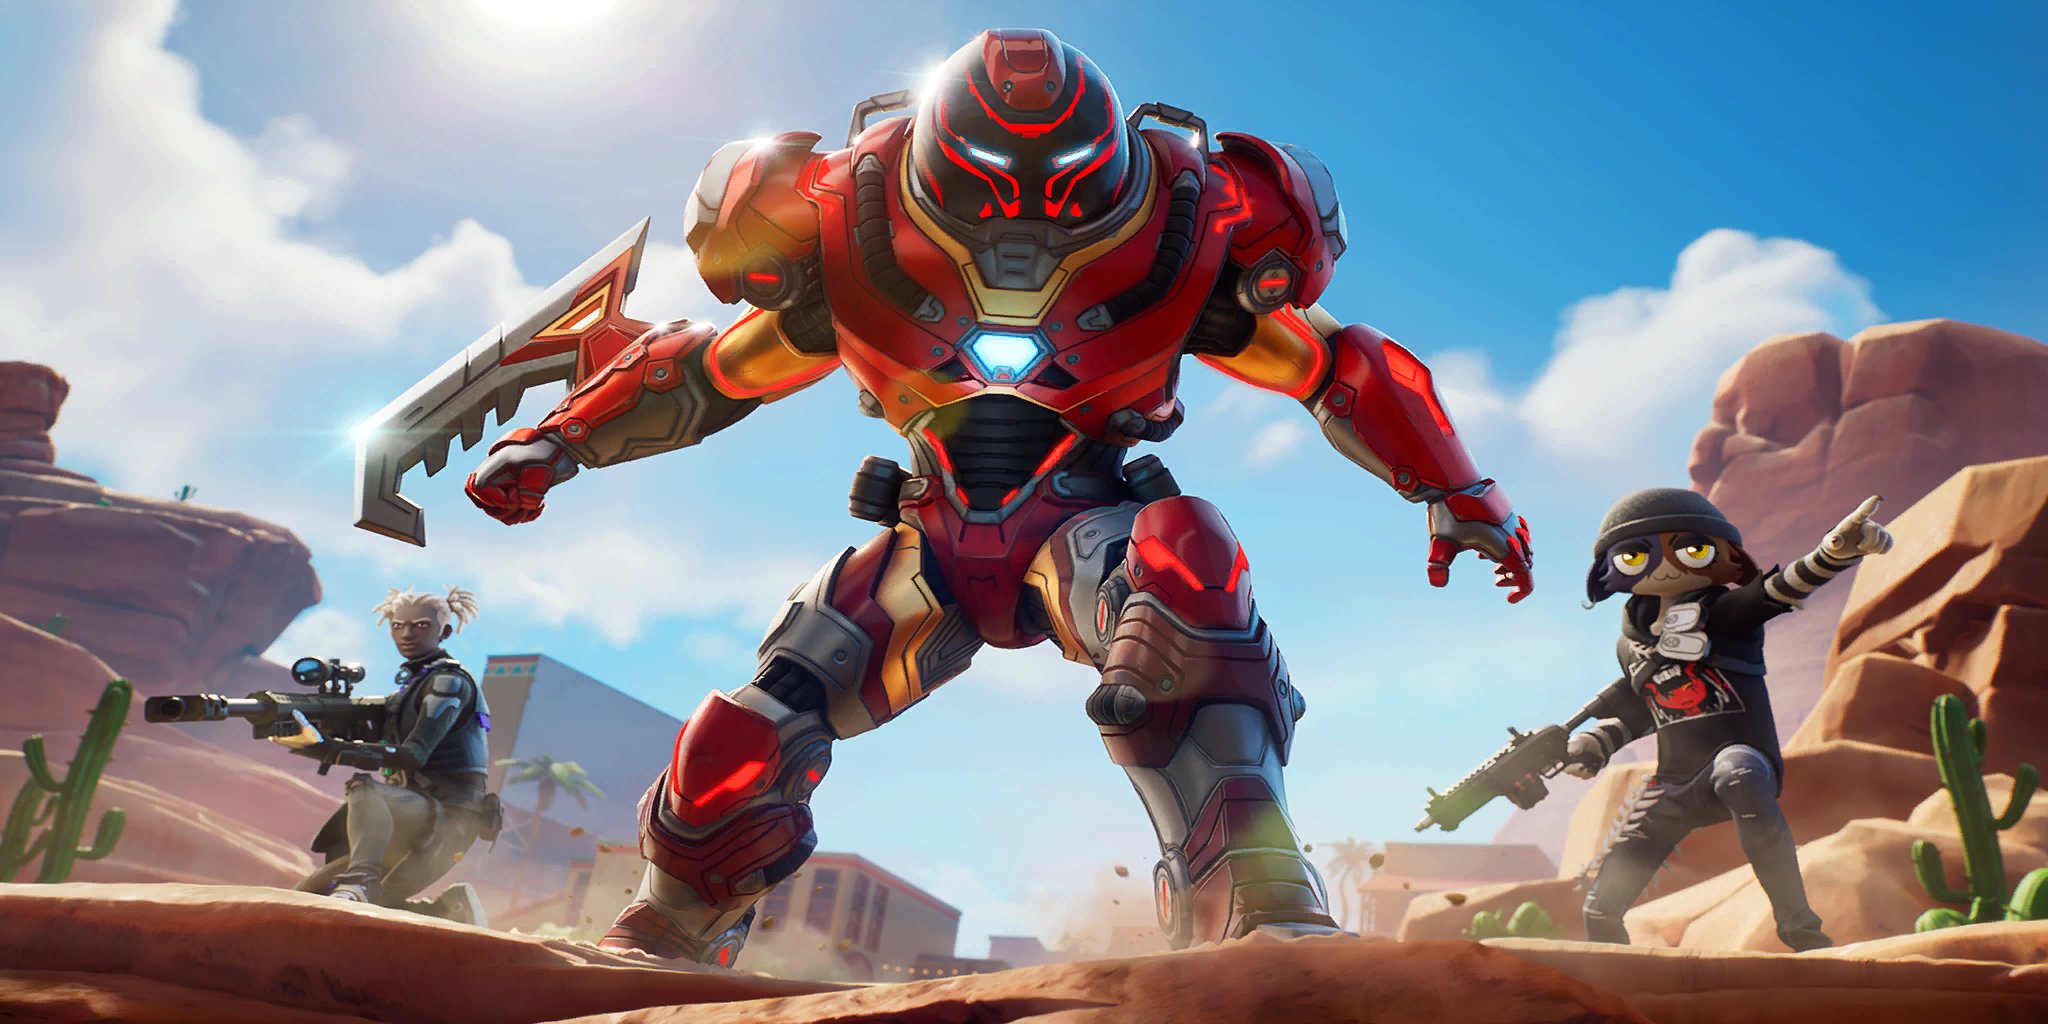 Fortnite will receive new Iron Man skins according to leak